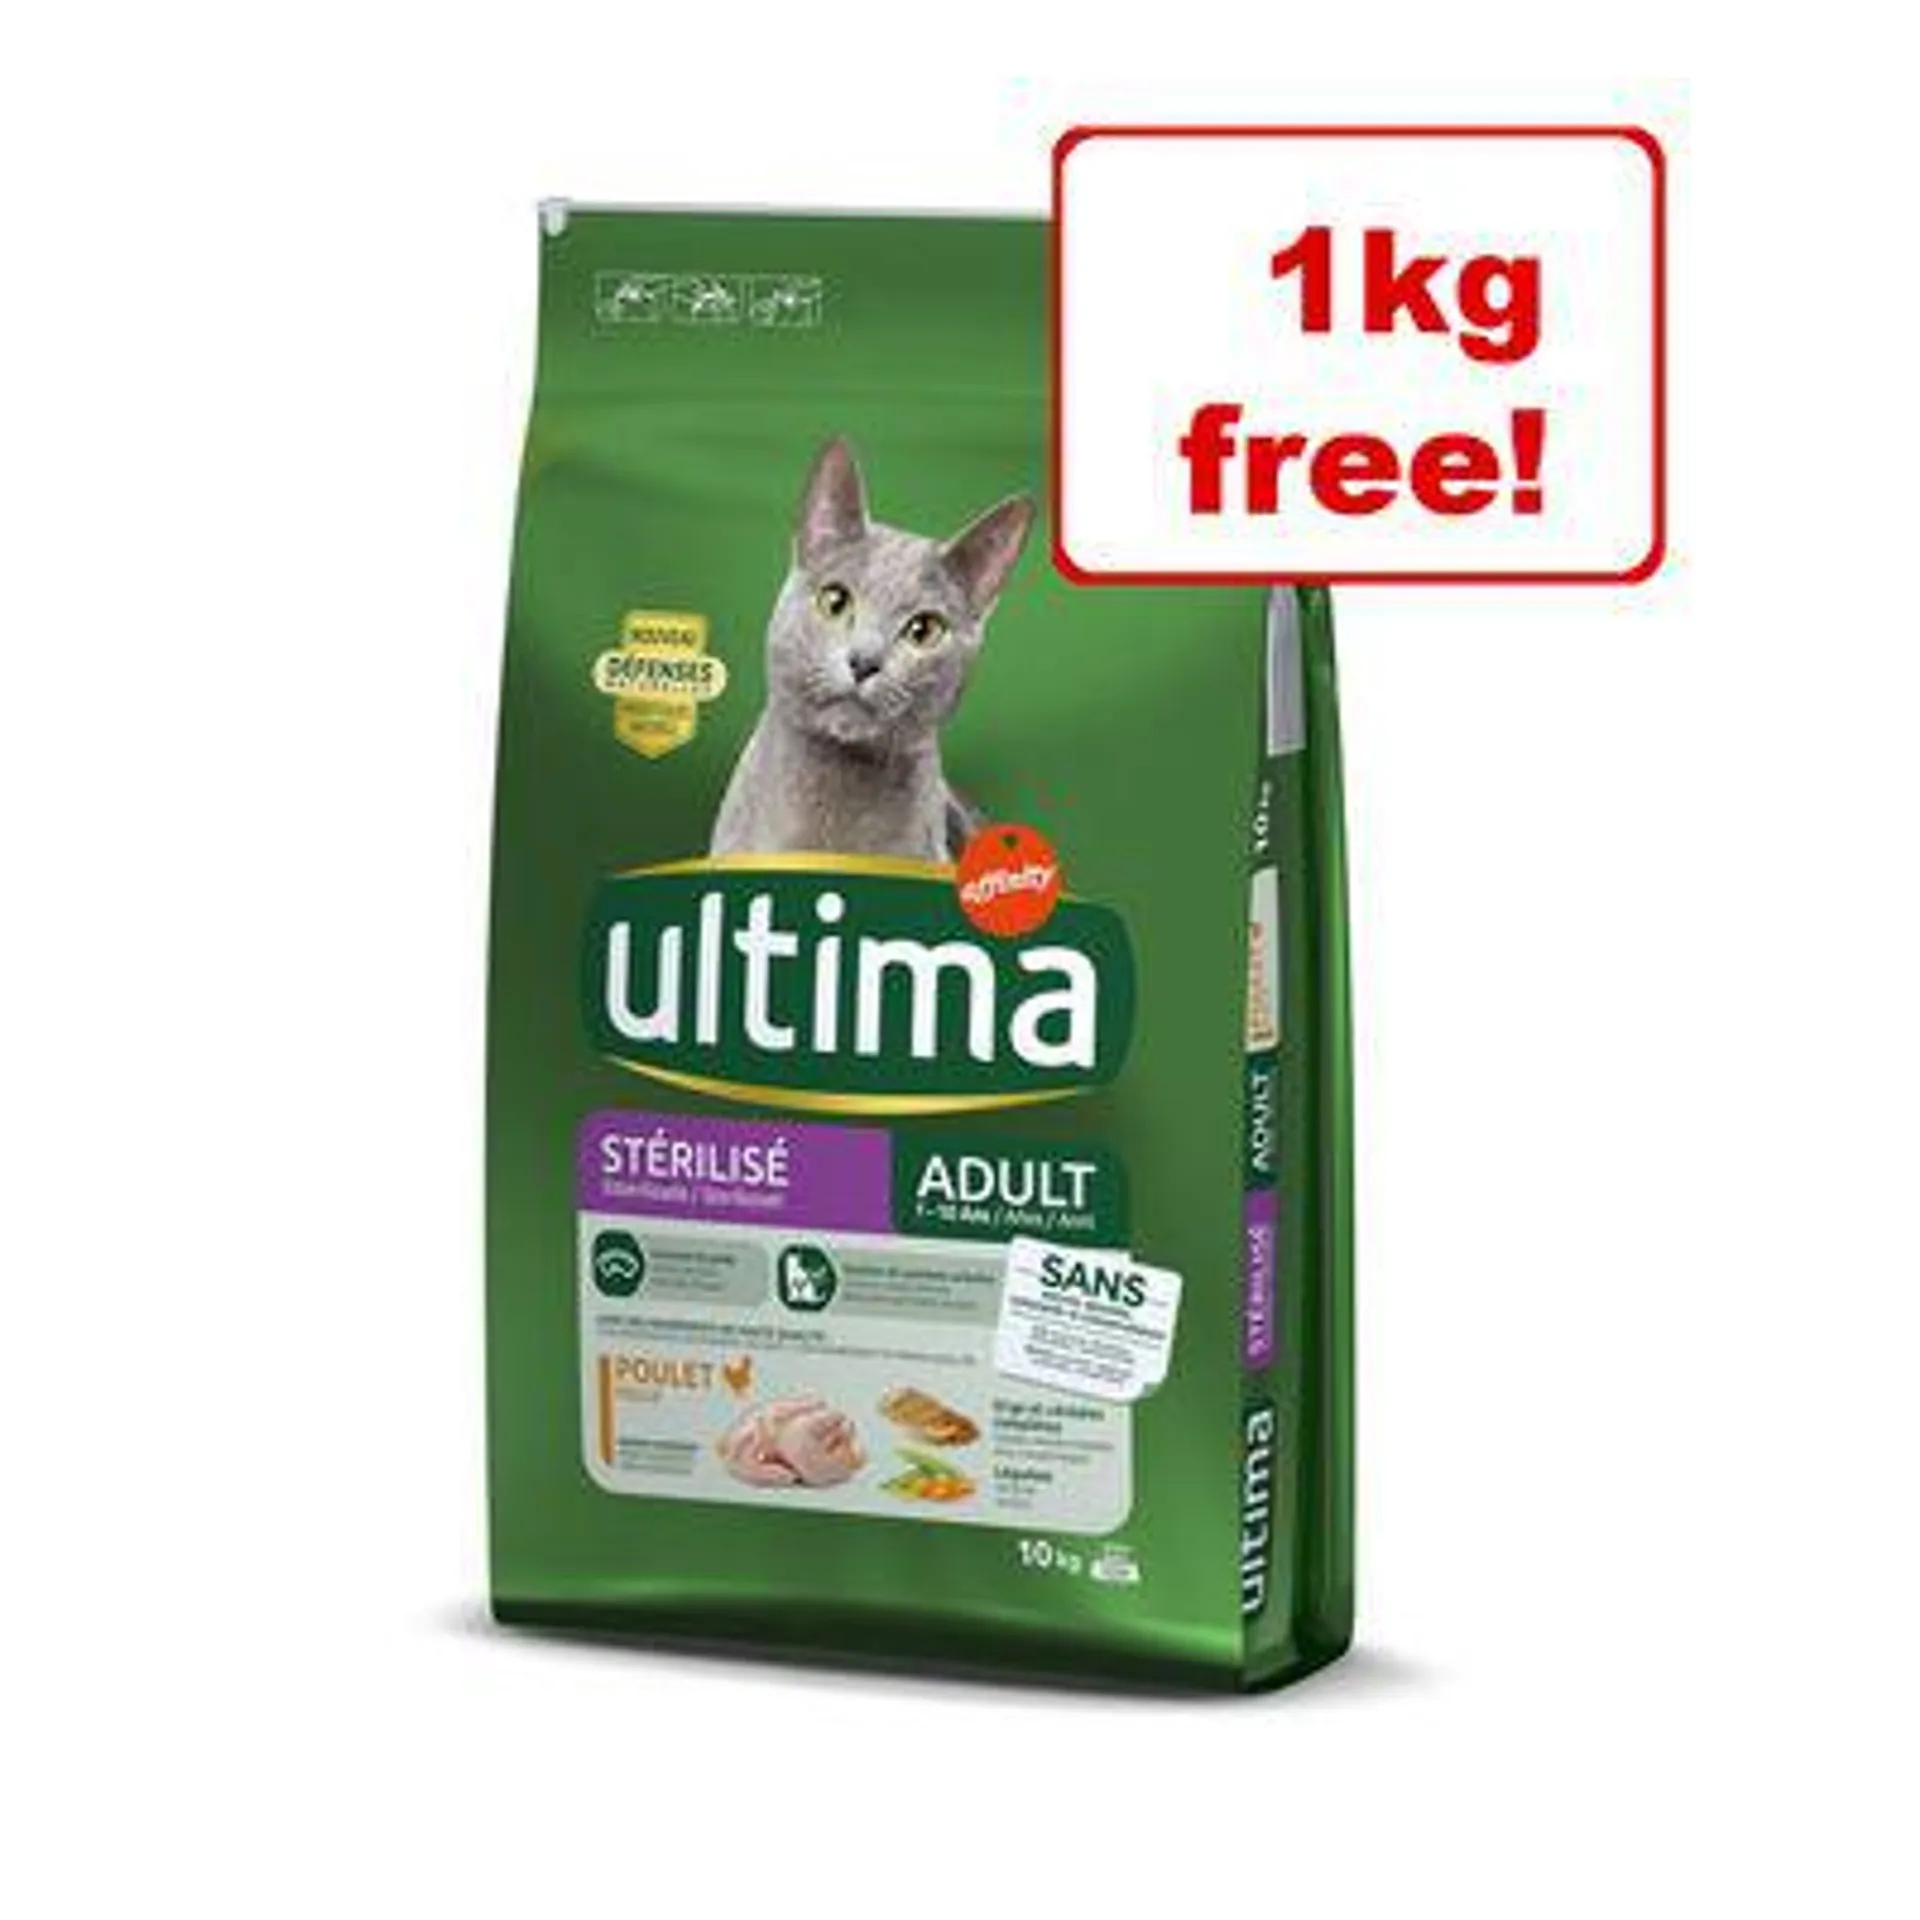 7.5/10kg Affinity Ultima Dry Cat Food - 1kg Free!*